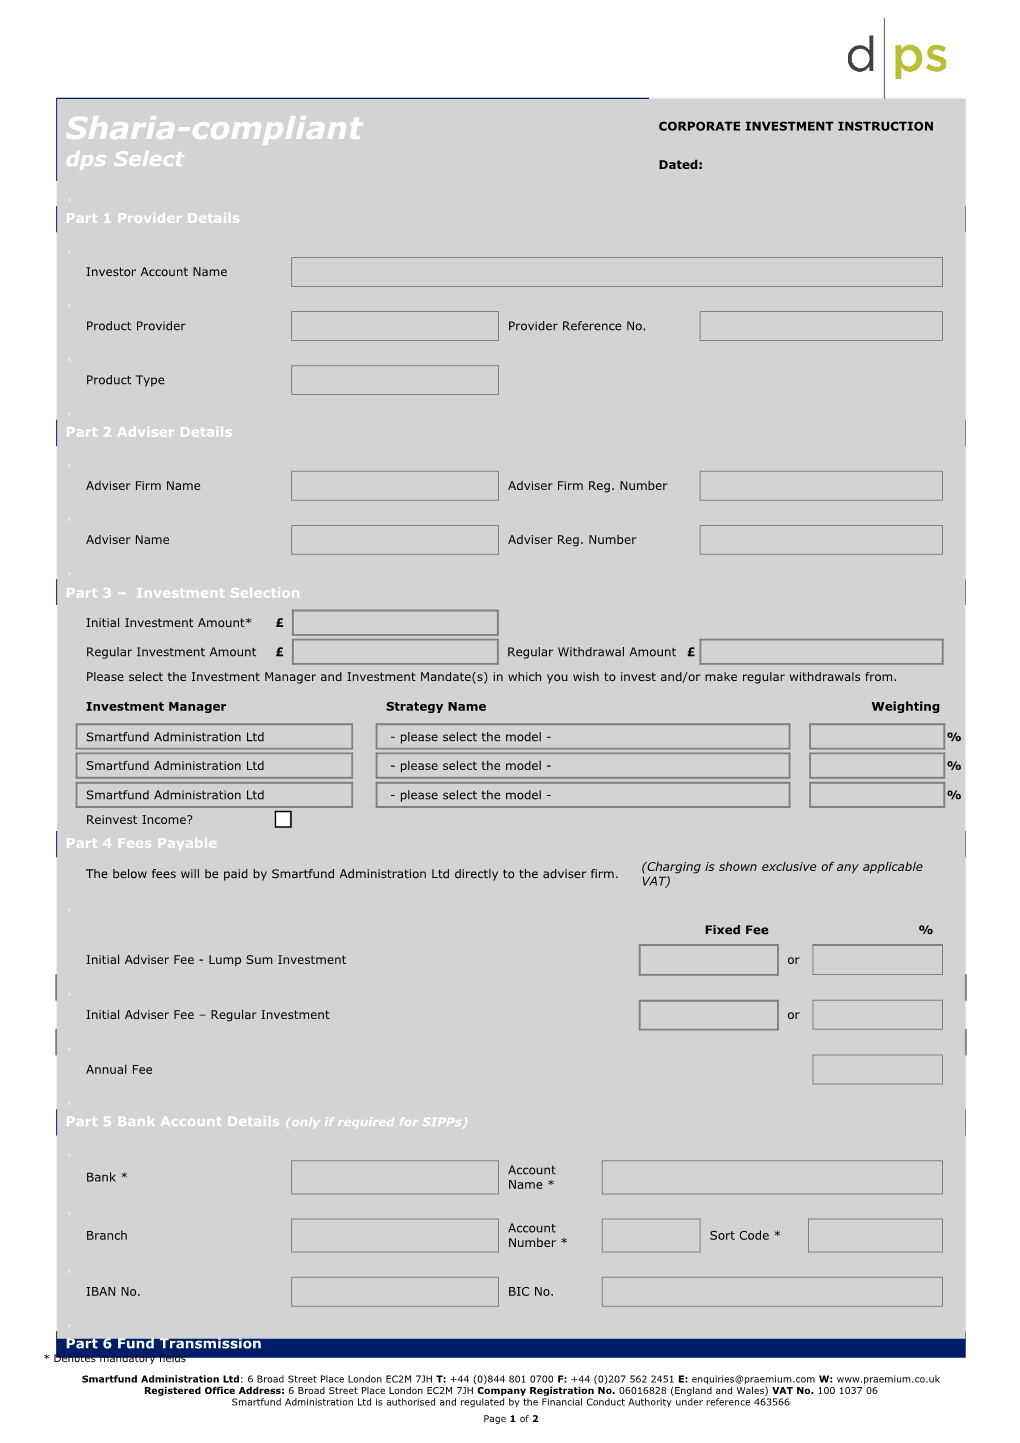 Registered Office Address: 6 Broad Street Place London EC2M 7JH Company Registration No